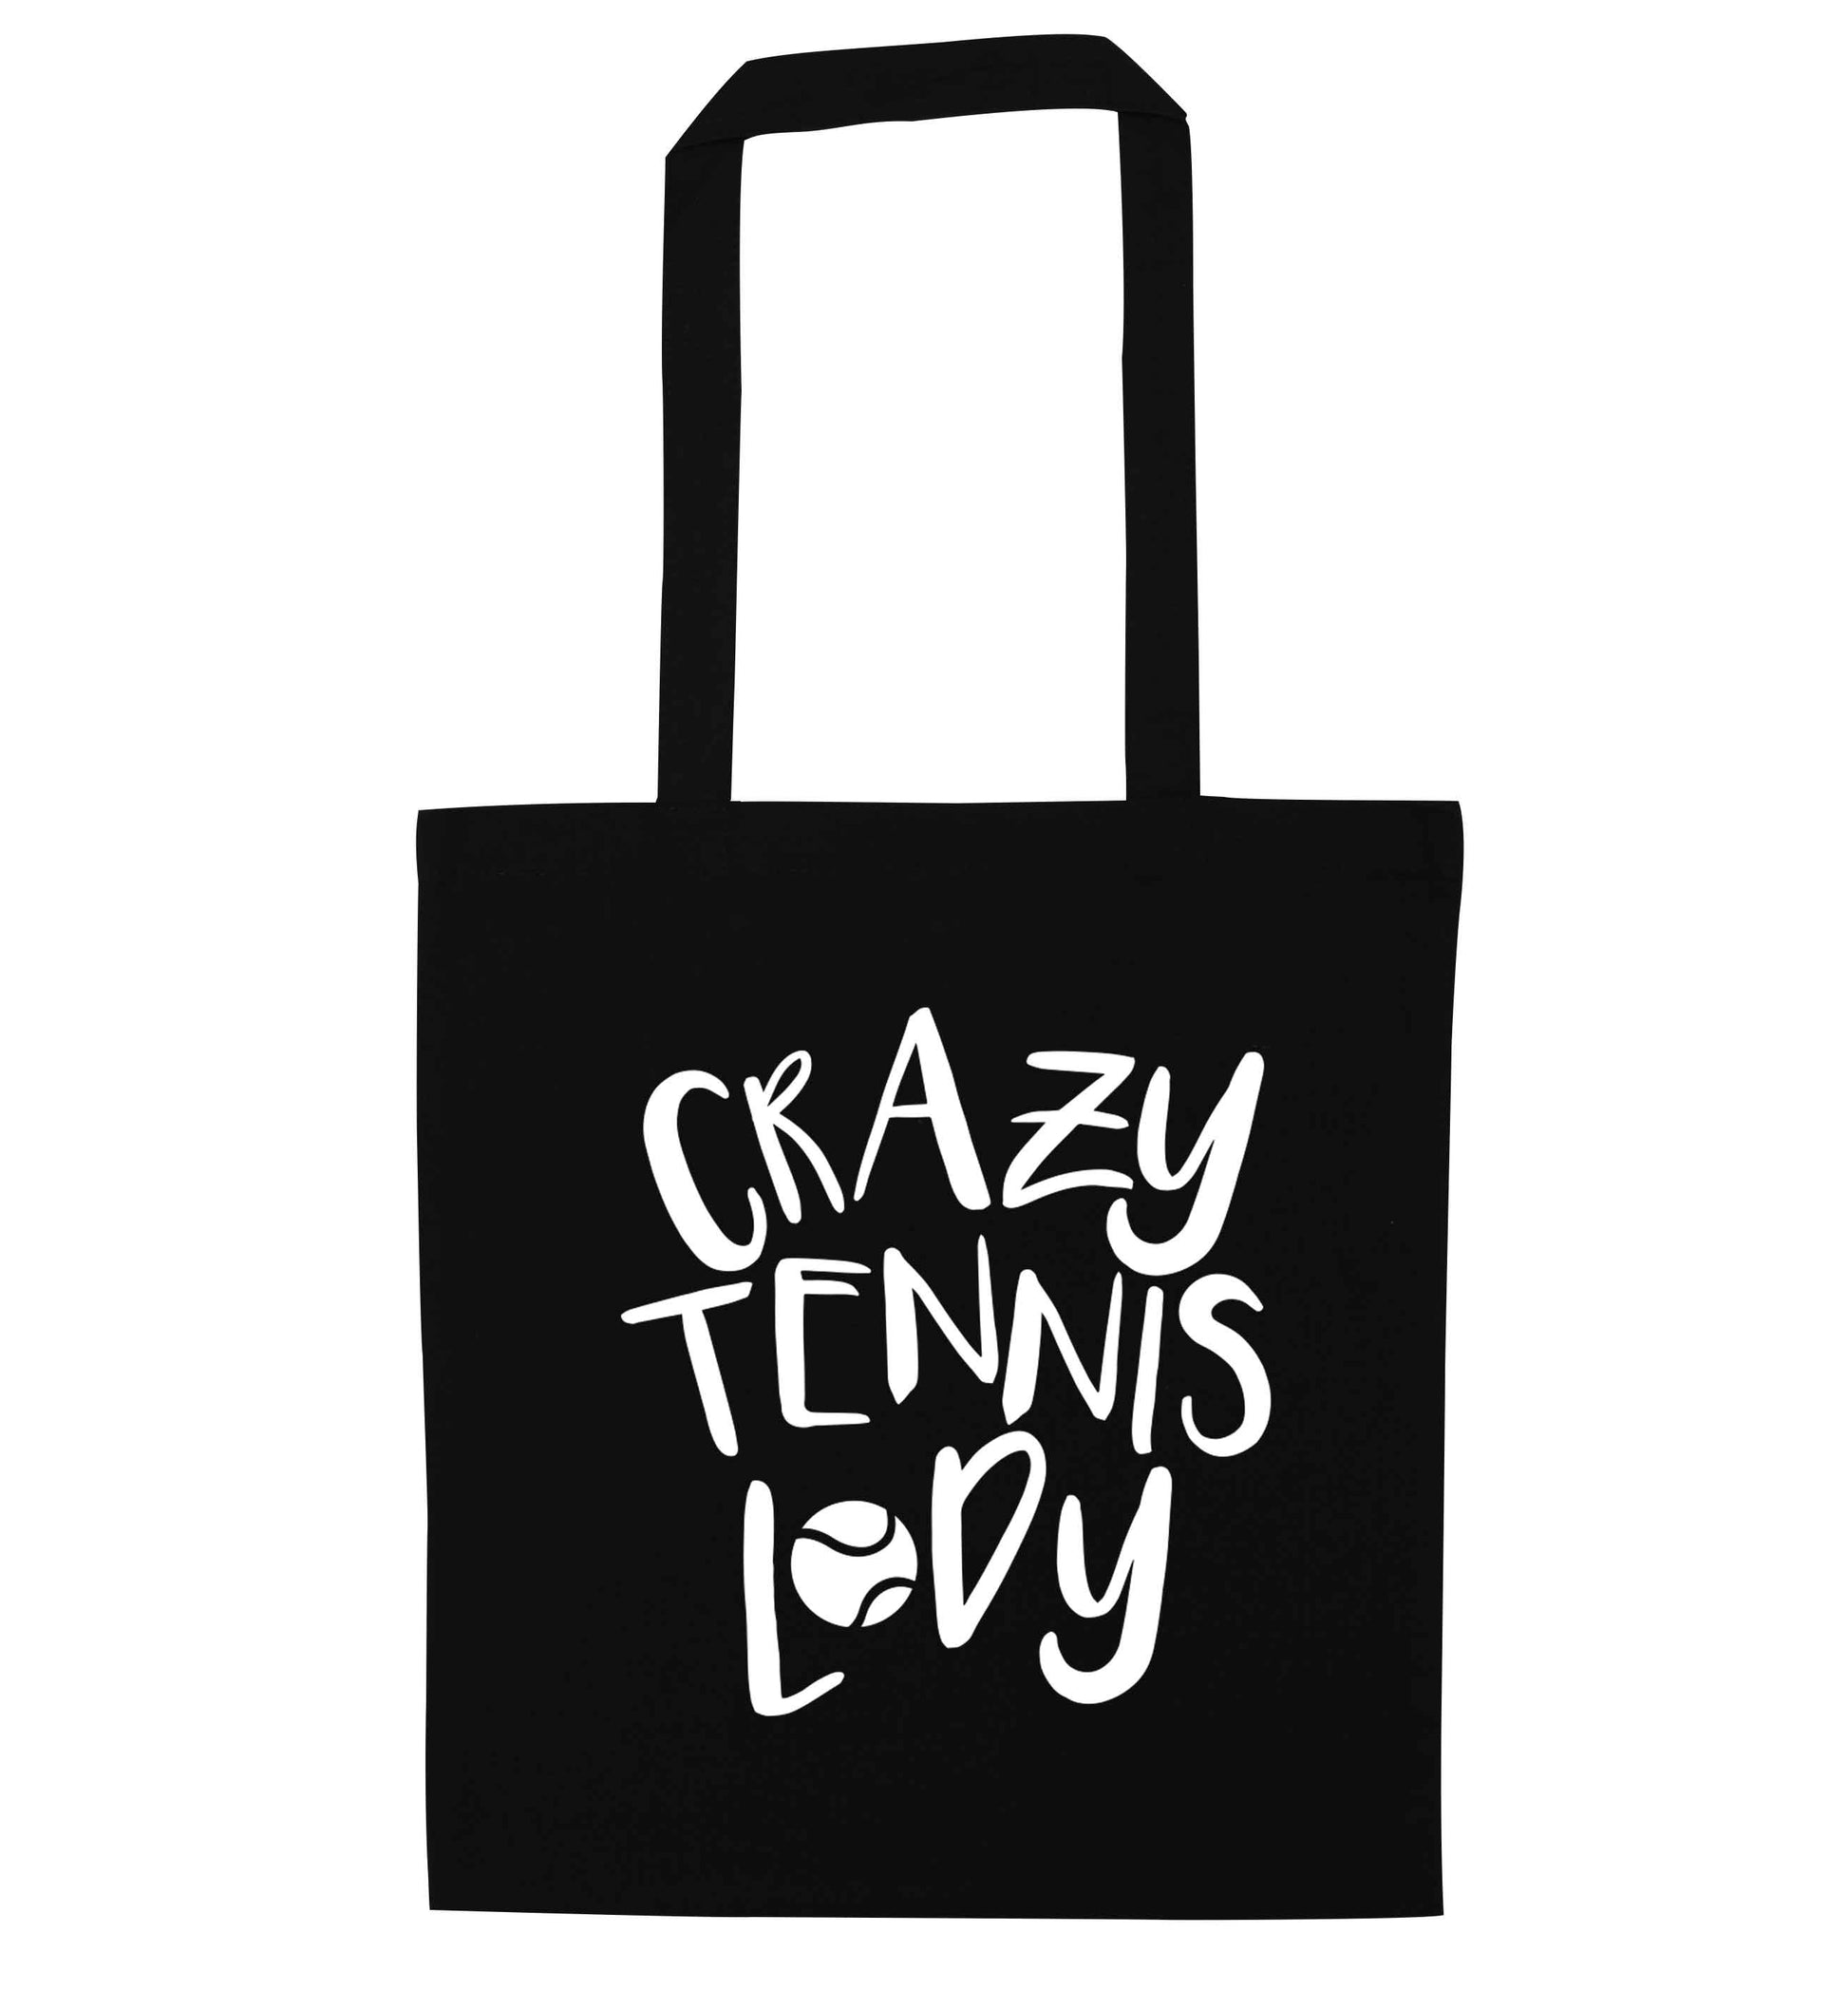 Crazy tennis lady black tote bag